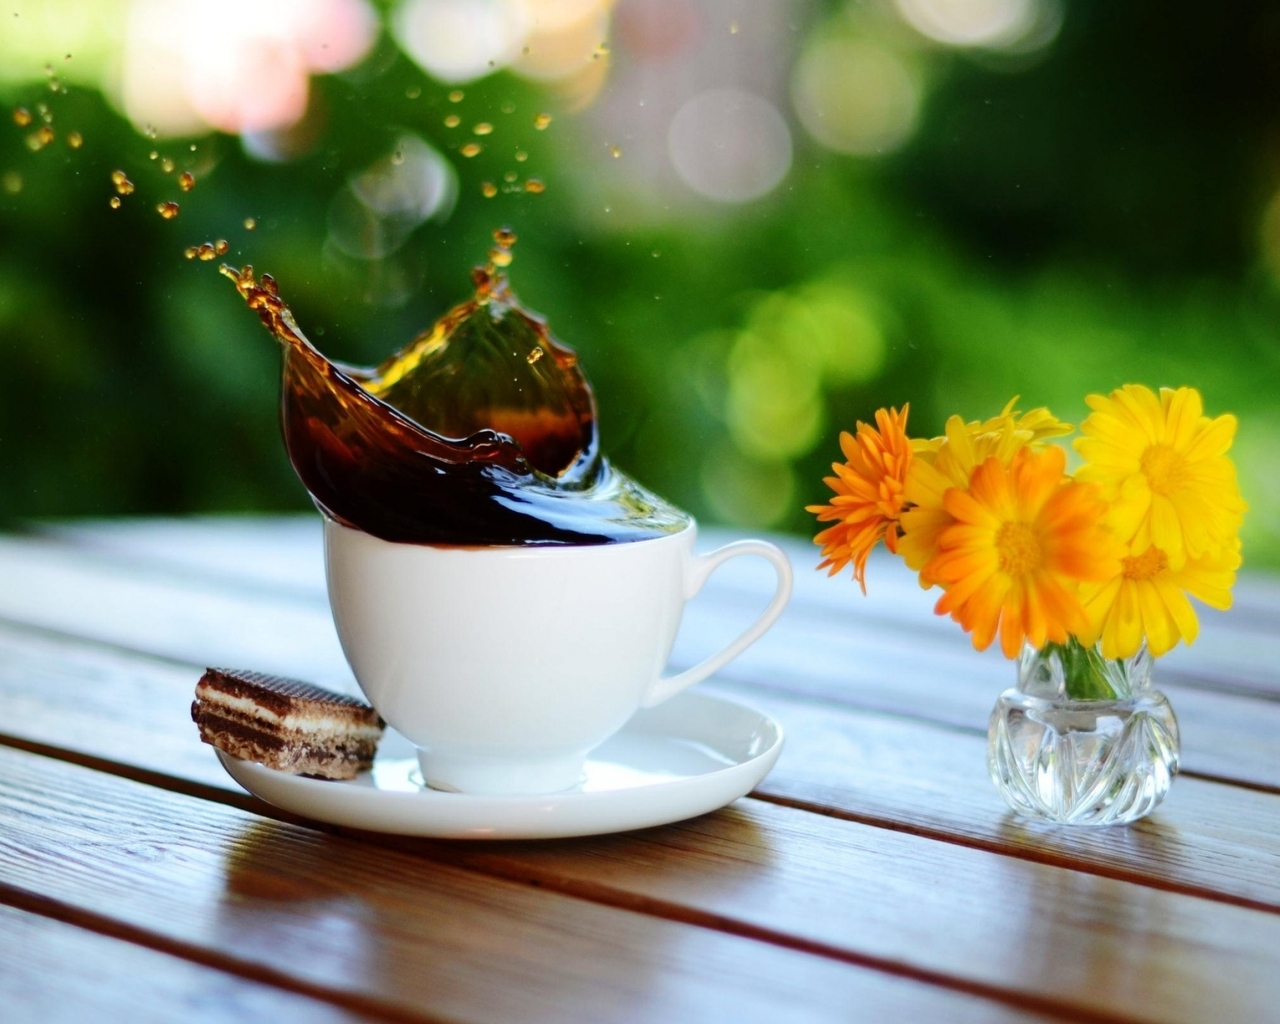 Картинка: Чашка кофе, всплеск, брызги, пироженое, цветочки, стол